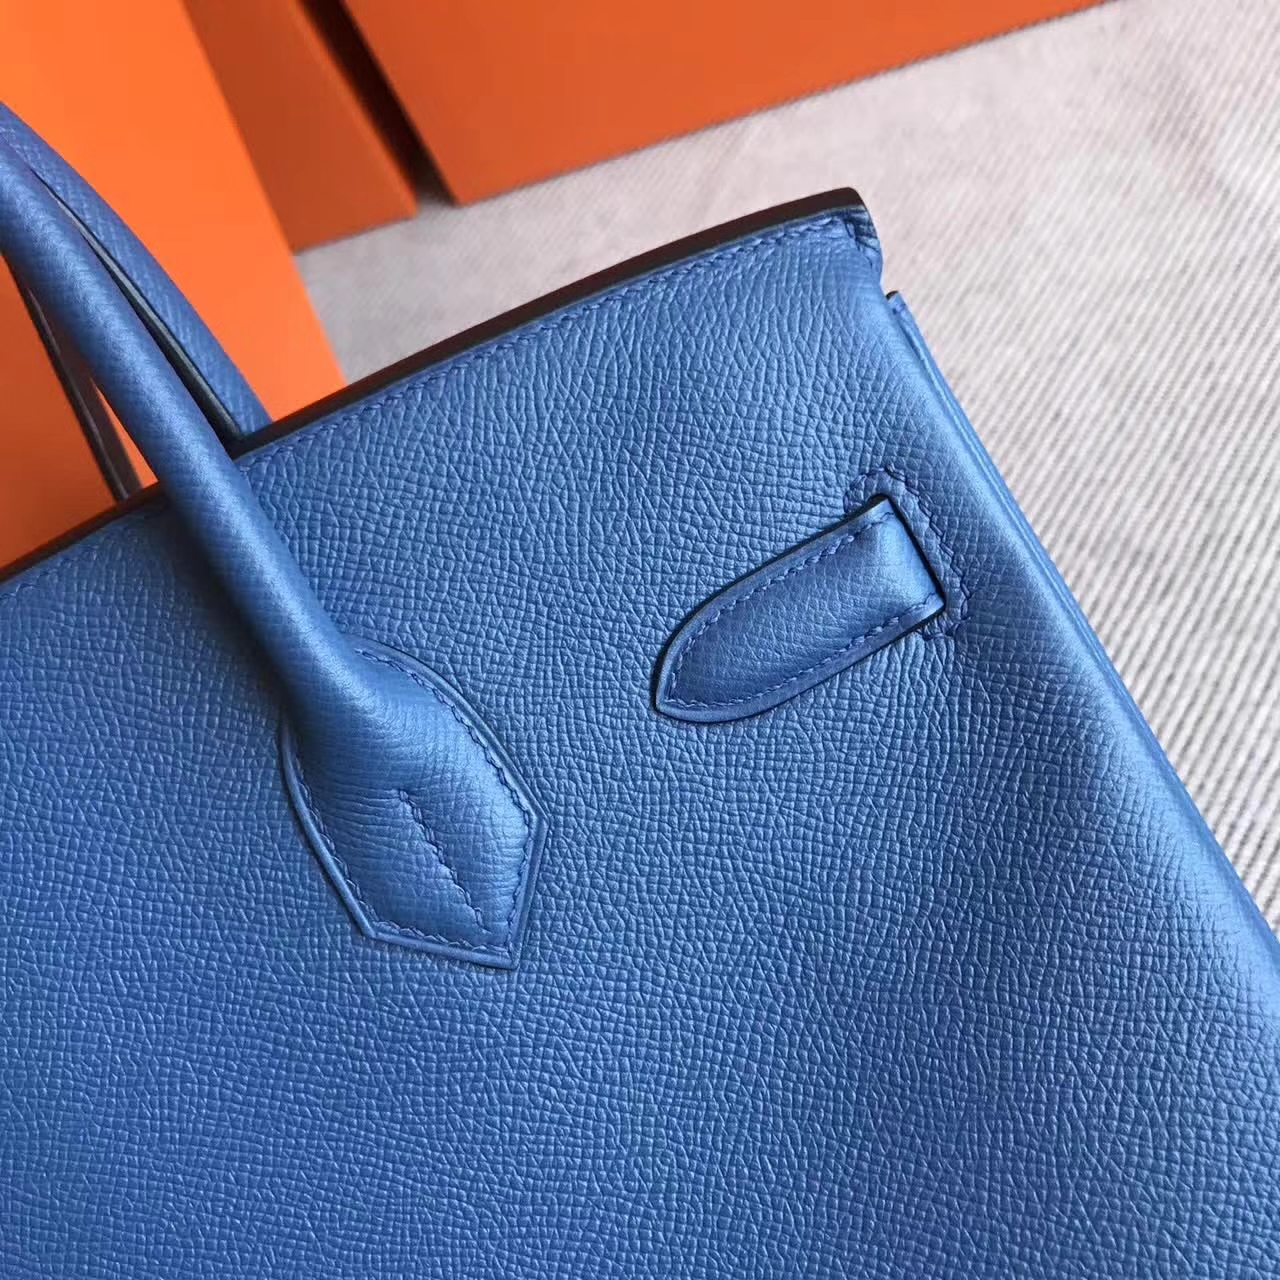 Hand Stitching Hermes Birkin Bag30cm in R2 Agate Blue Epsom Leather